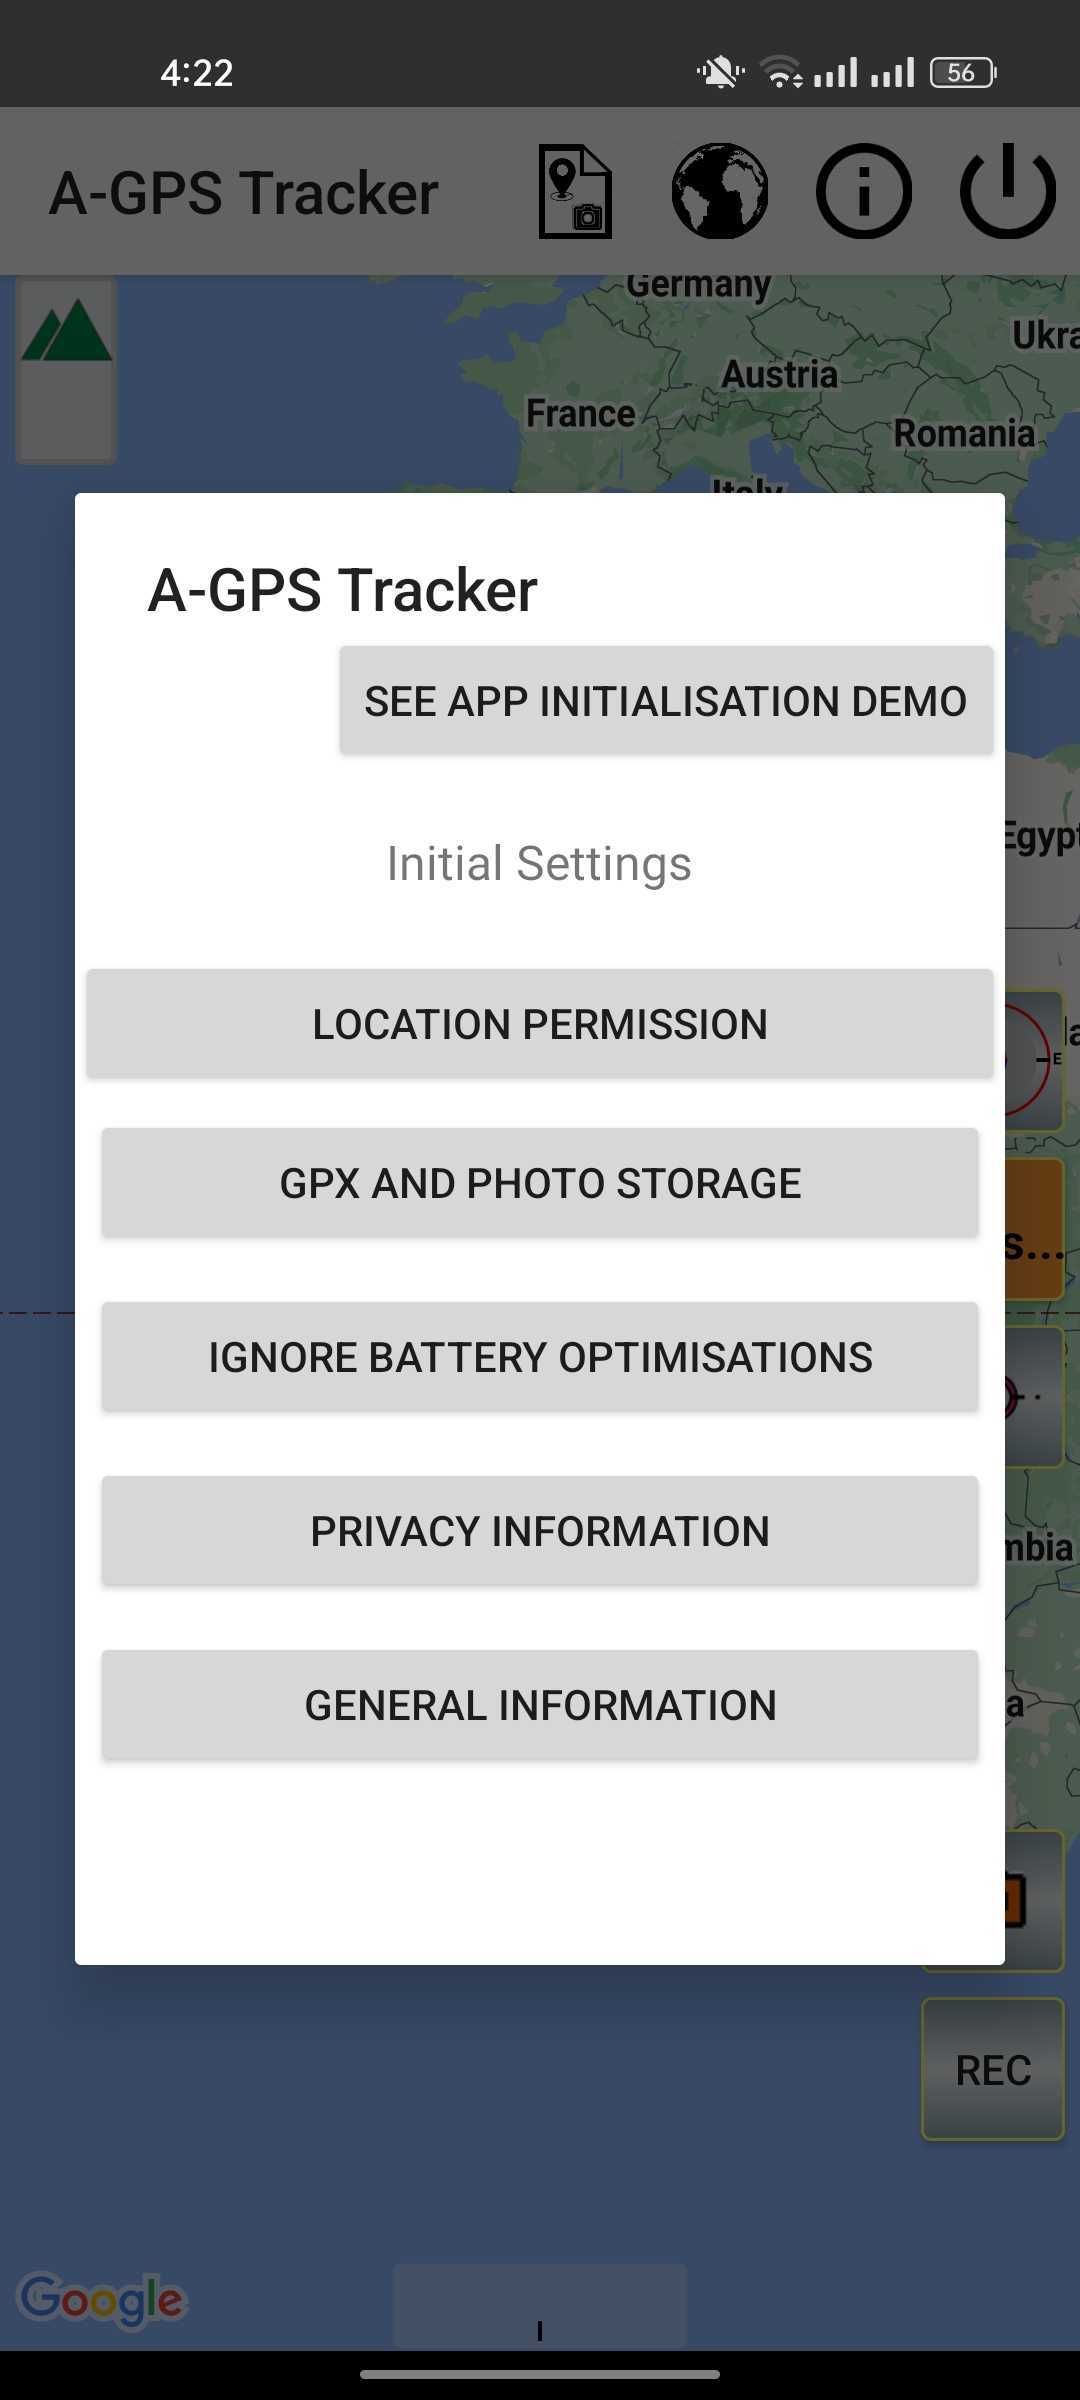 A-GPS Tracker settings